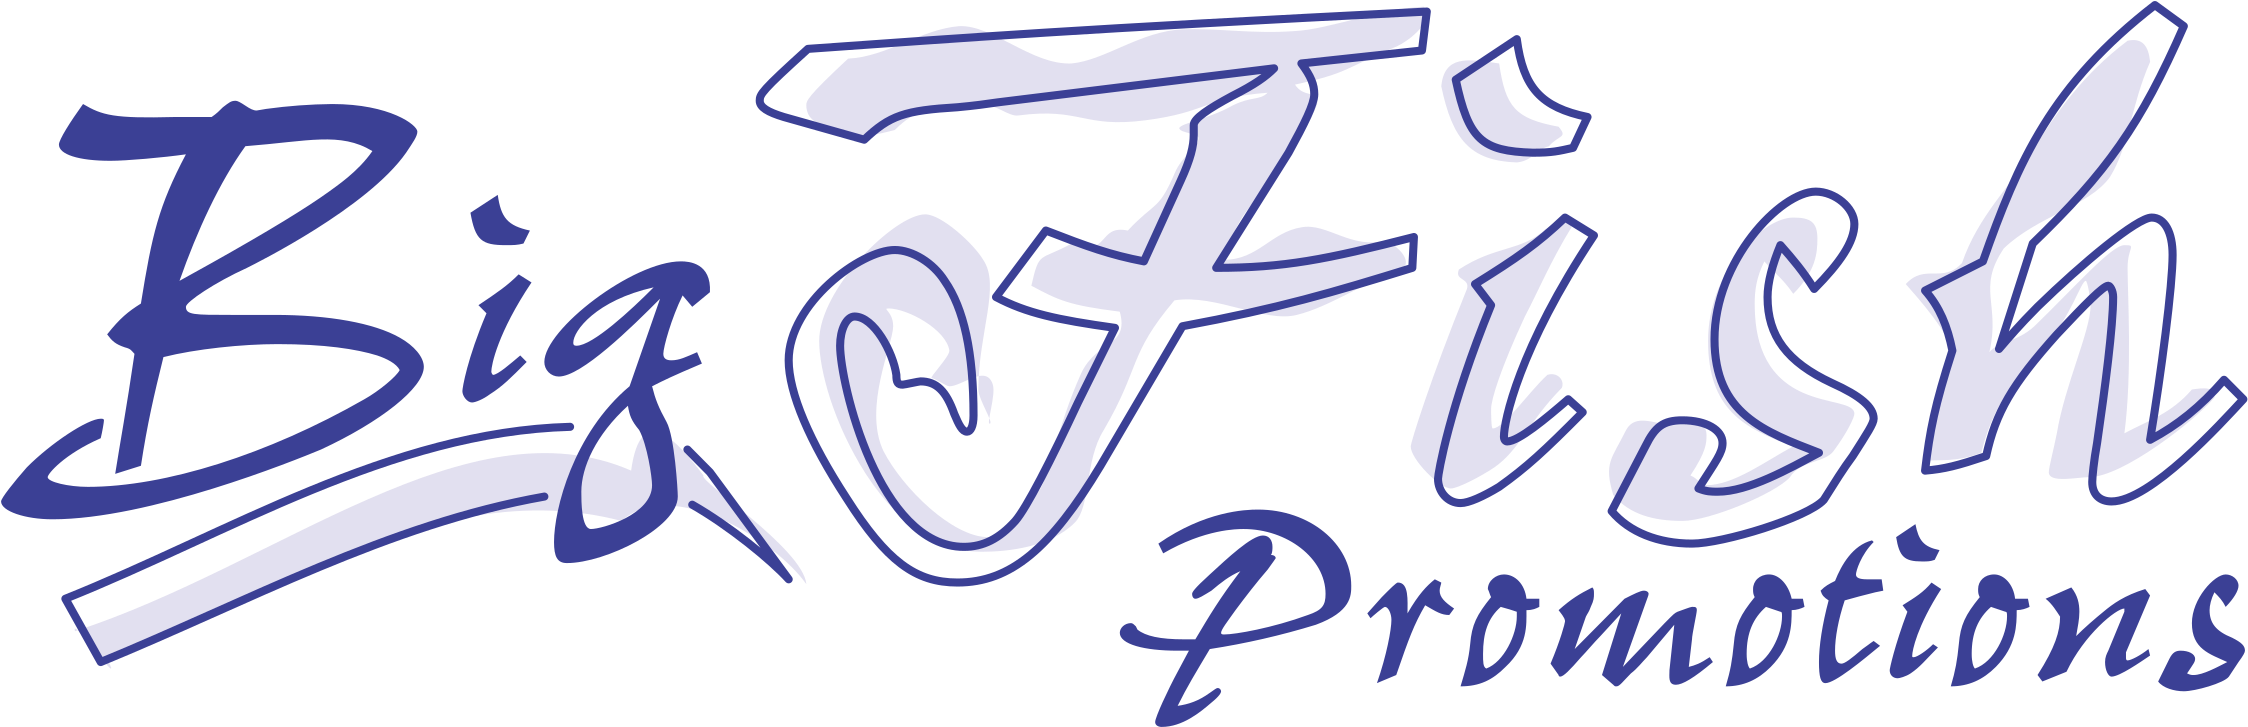 Big Fish Promotions 01 Logo Png Transparent - Calligraphy (2400x2400), Png Download